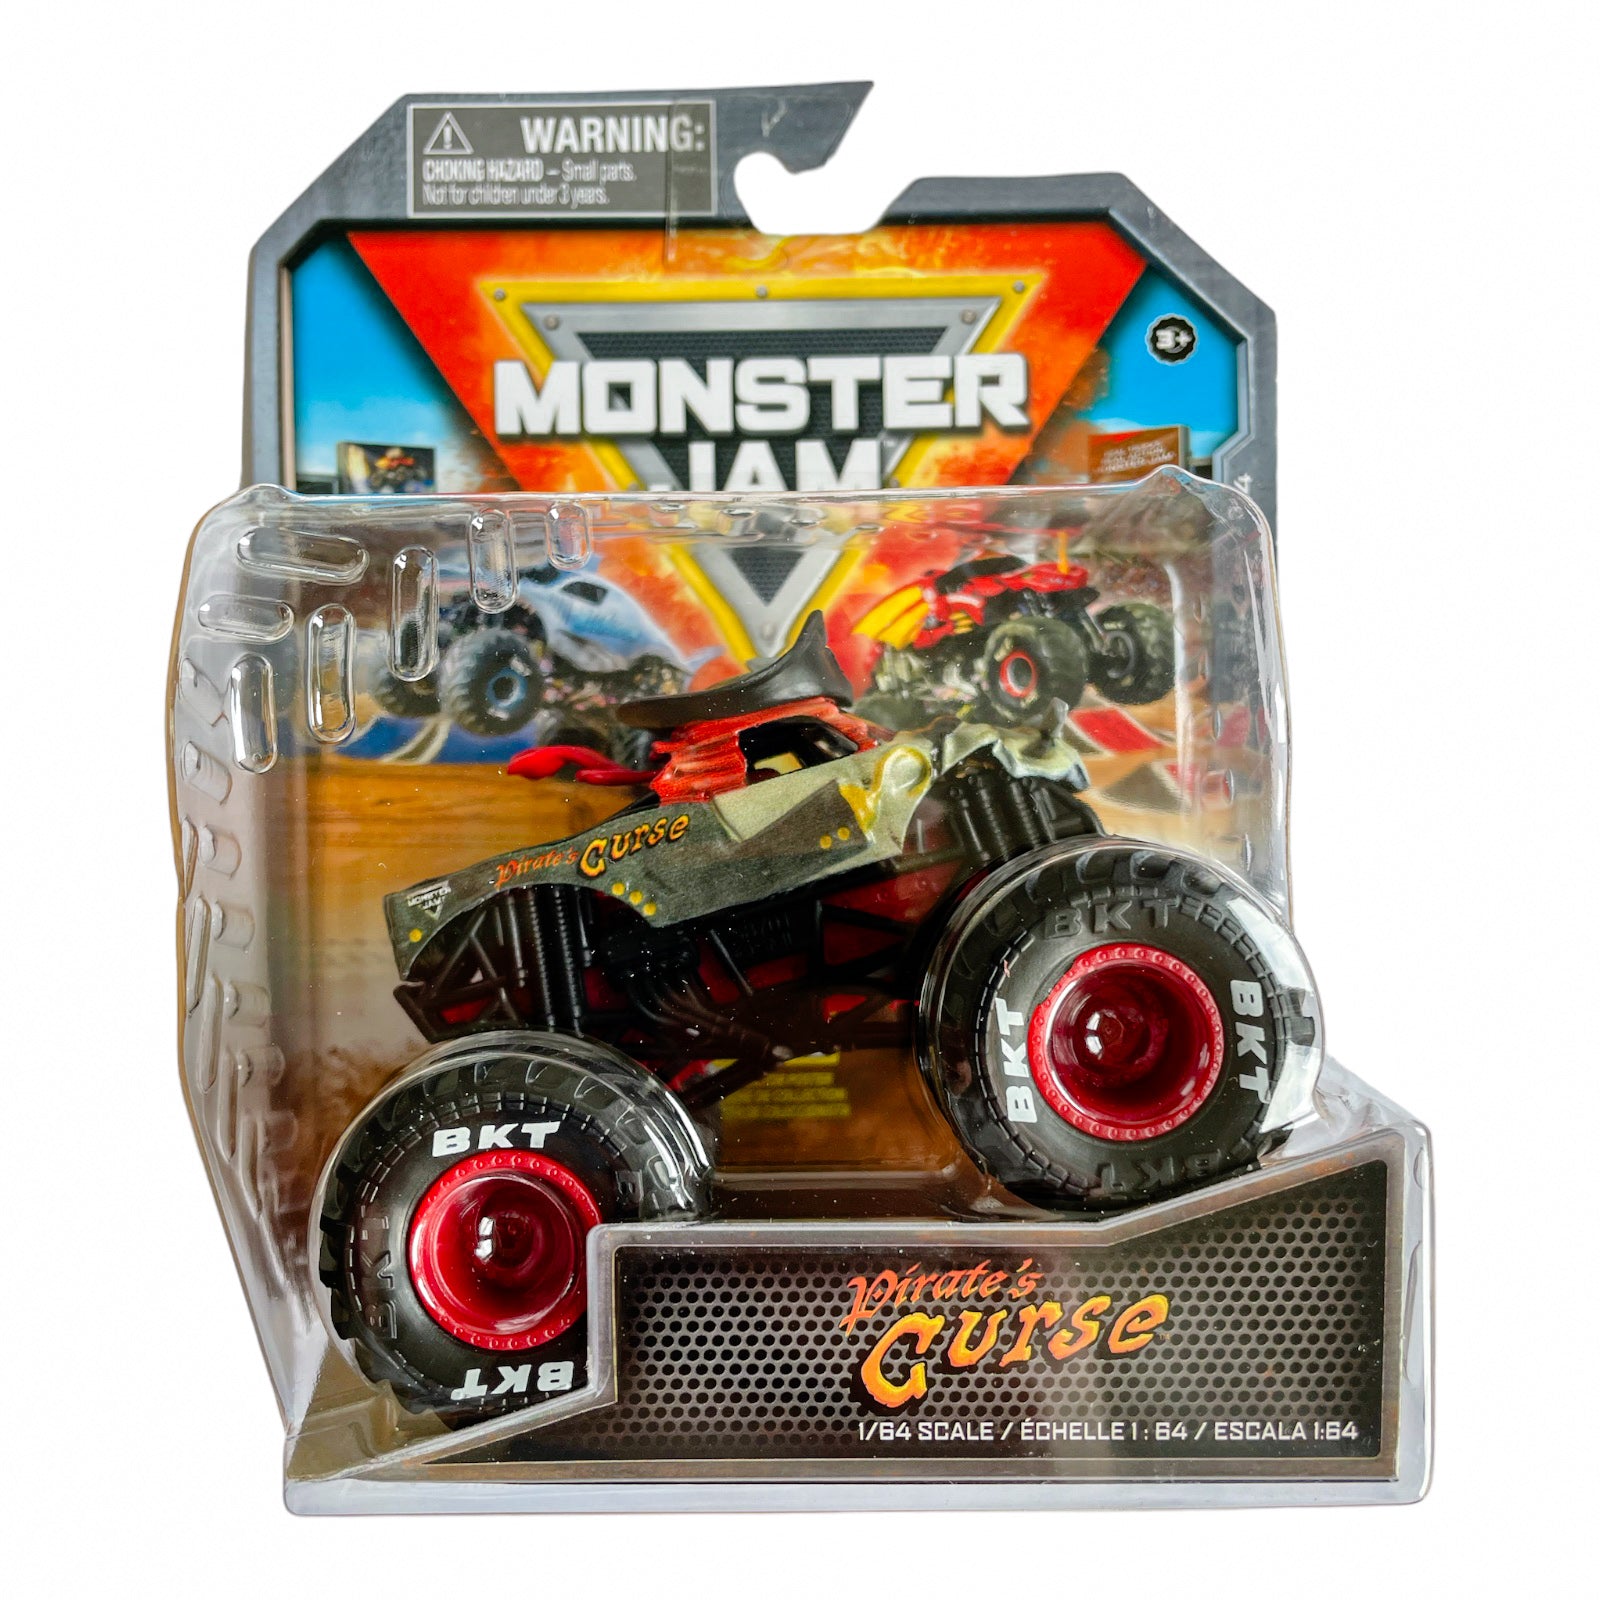 Monster Jam Die-Cast Vehicle 1:64 Scale Pirate's Curse Monster Jam